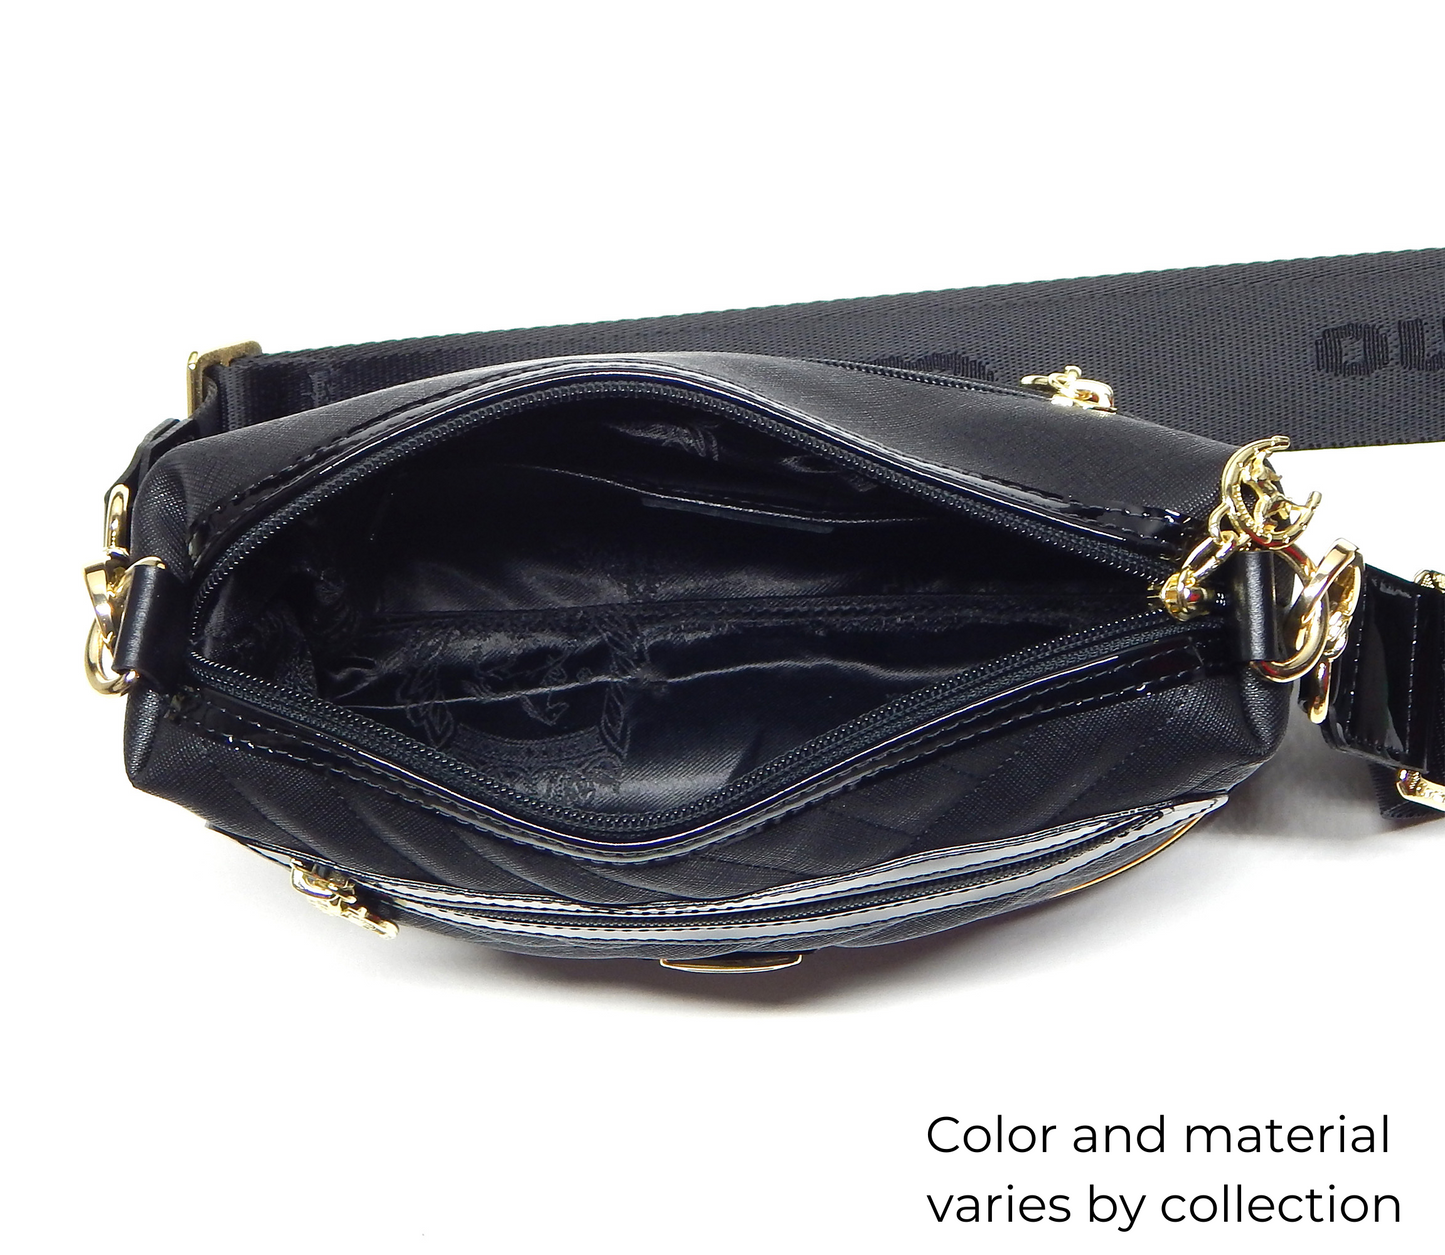 #color_ SaddleBrown | Cavalinho Cavalo Lusitano Leather Crossbody Bag - SaddleBrown - inside_0401_f923e9b0-3d79-4d9e-b5bb-73d727c4d61d